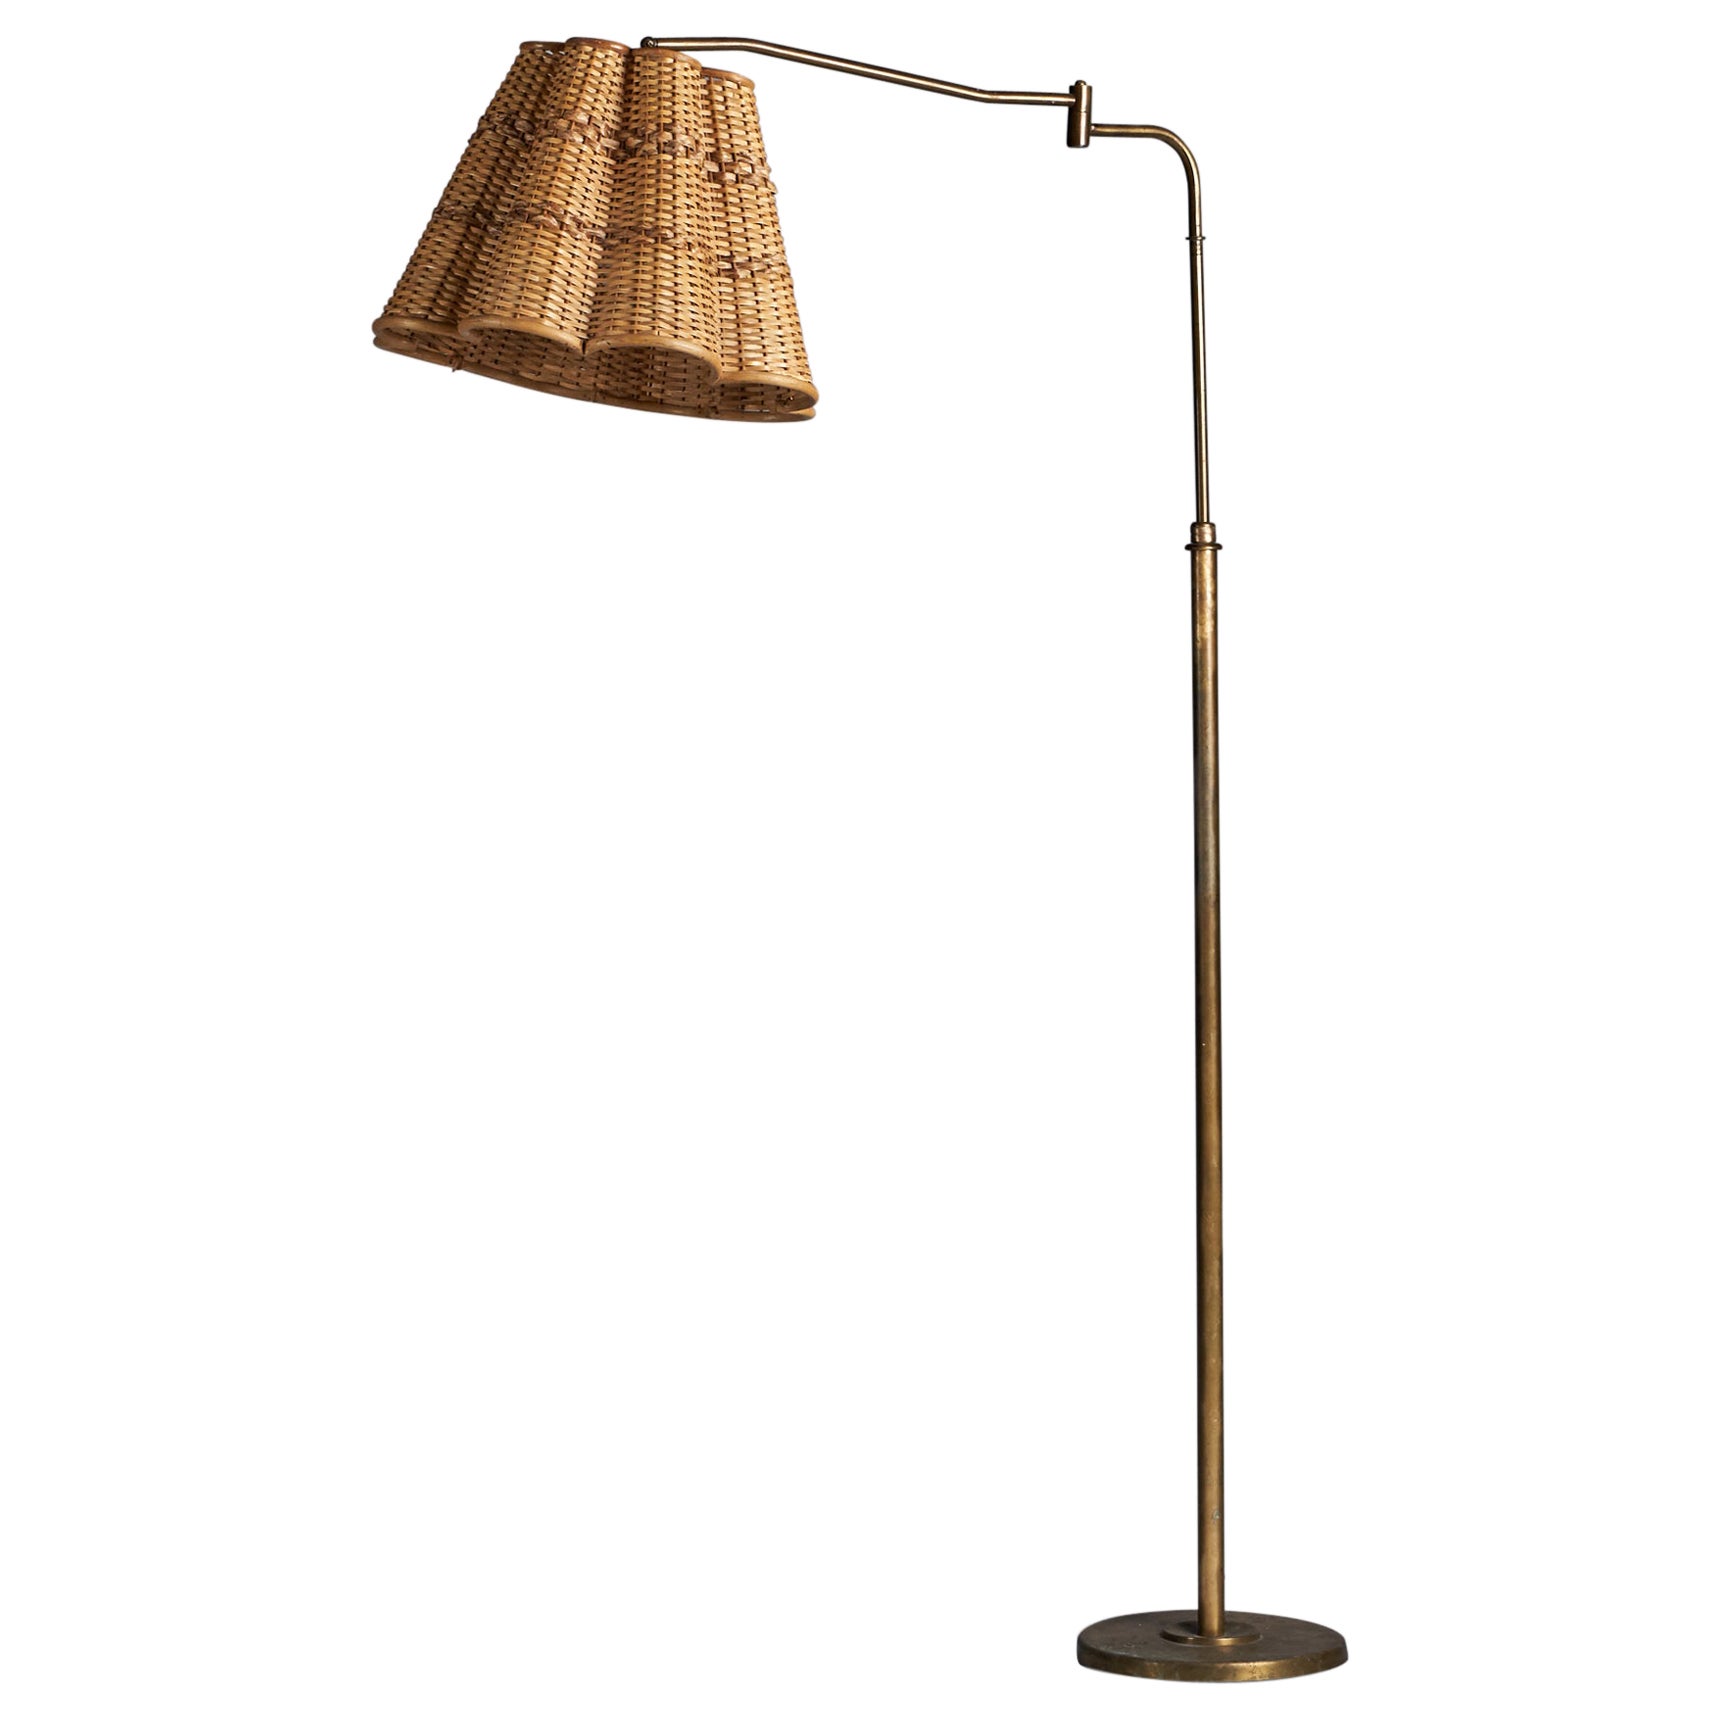 Italian Designer, Floor Lamp, Brass, Rattan, Bamboo, Italy, 1940s For Sale